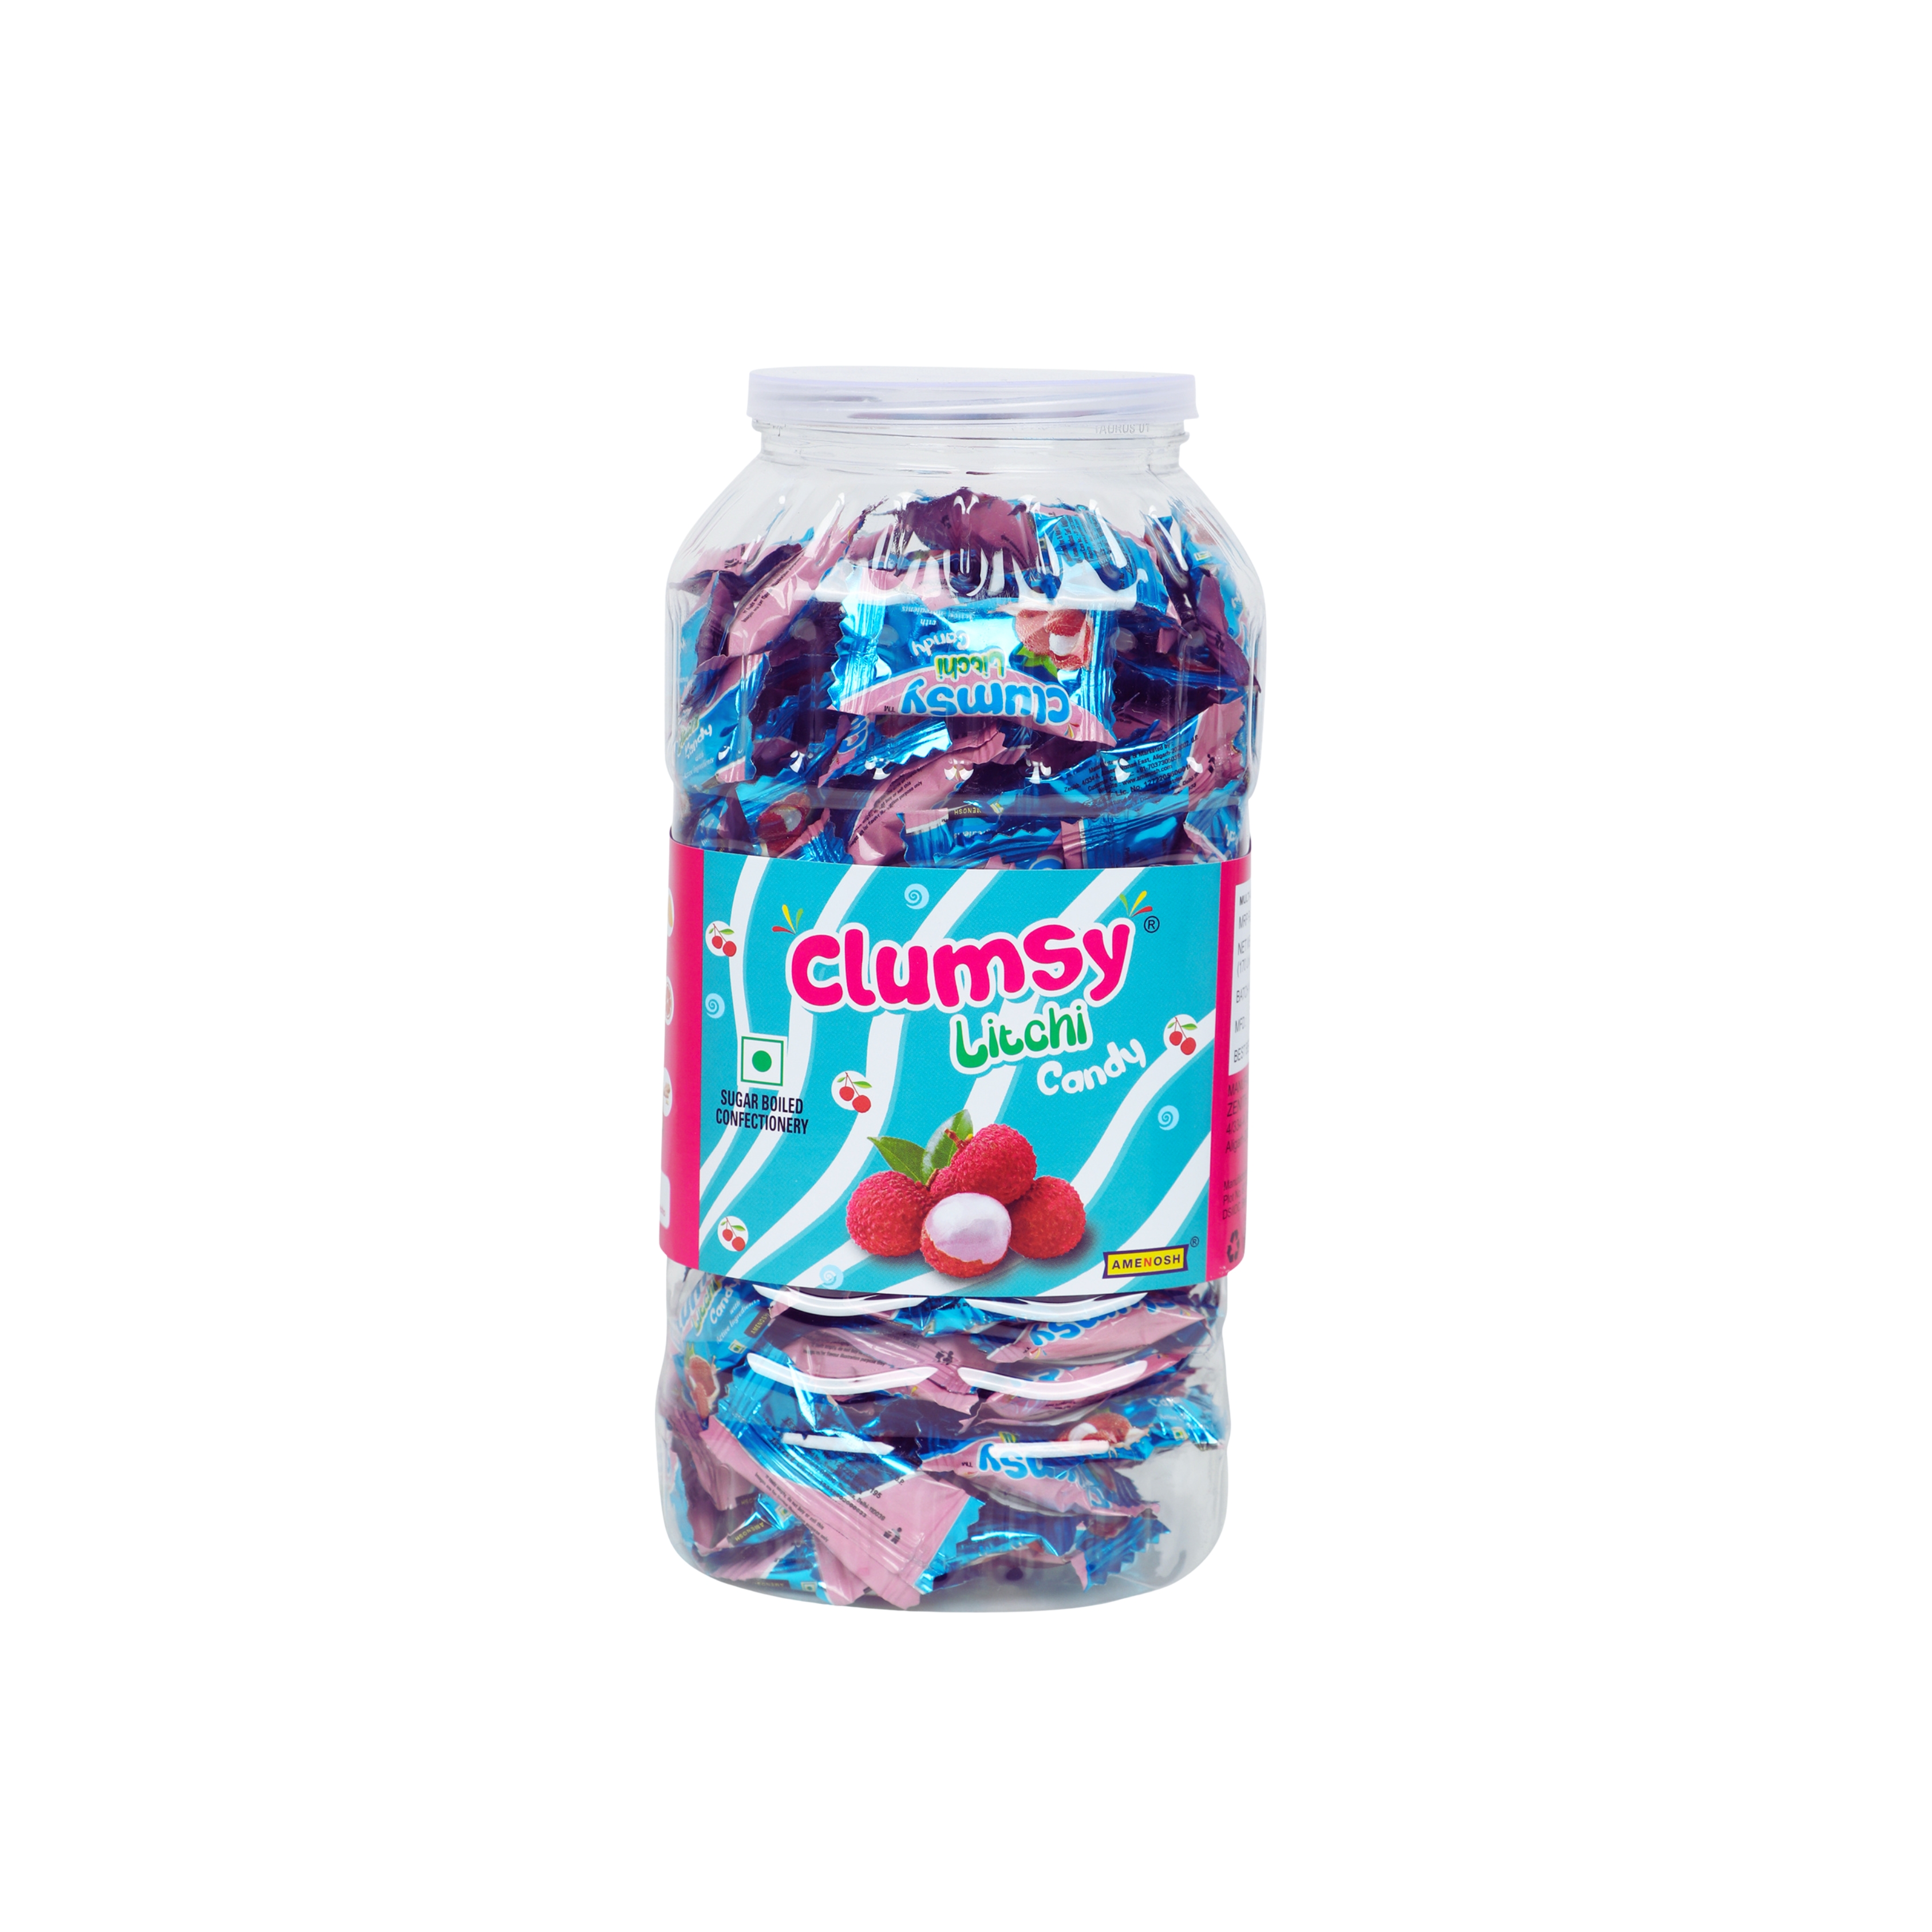 Clumsy Litchi candy Jar, 170 candy units